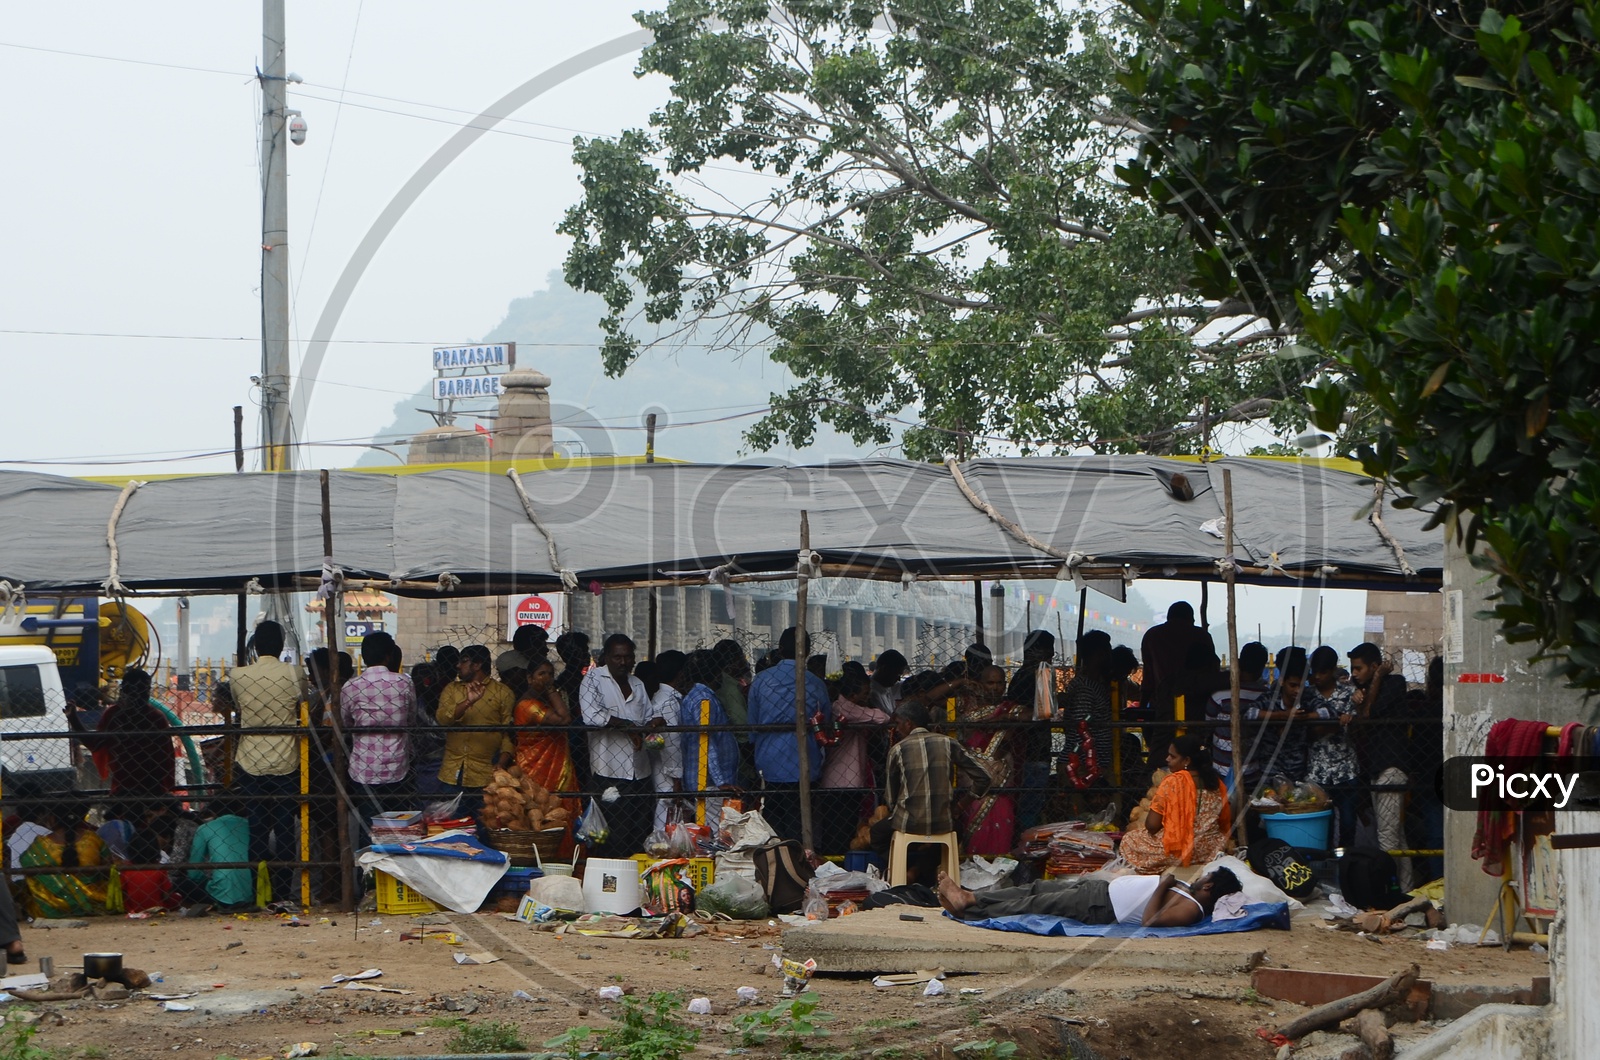 Hindu devotees wait in the queue line for darshan of Goddess Kanaka Durga.